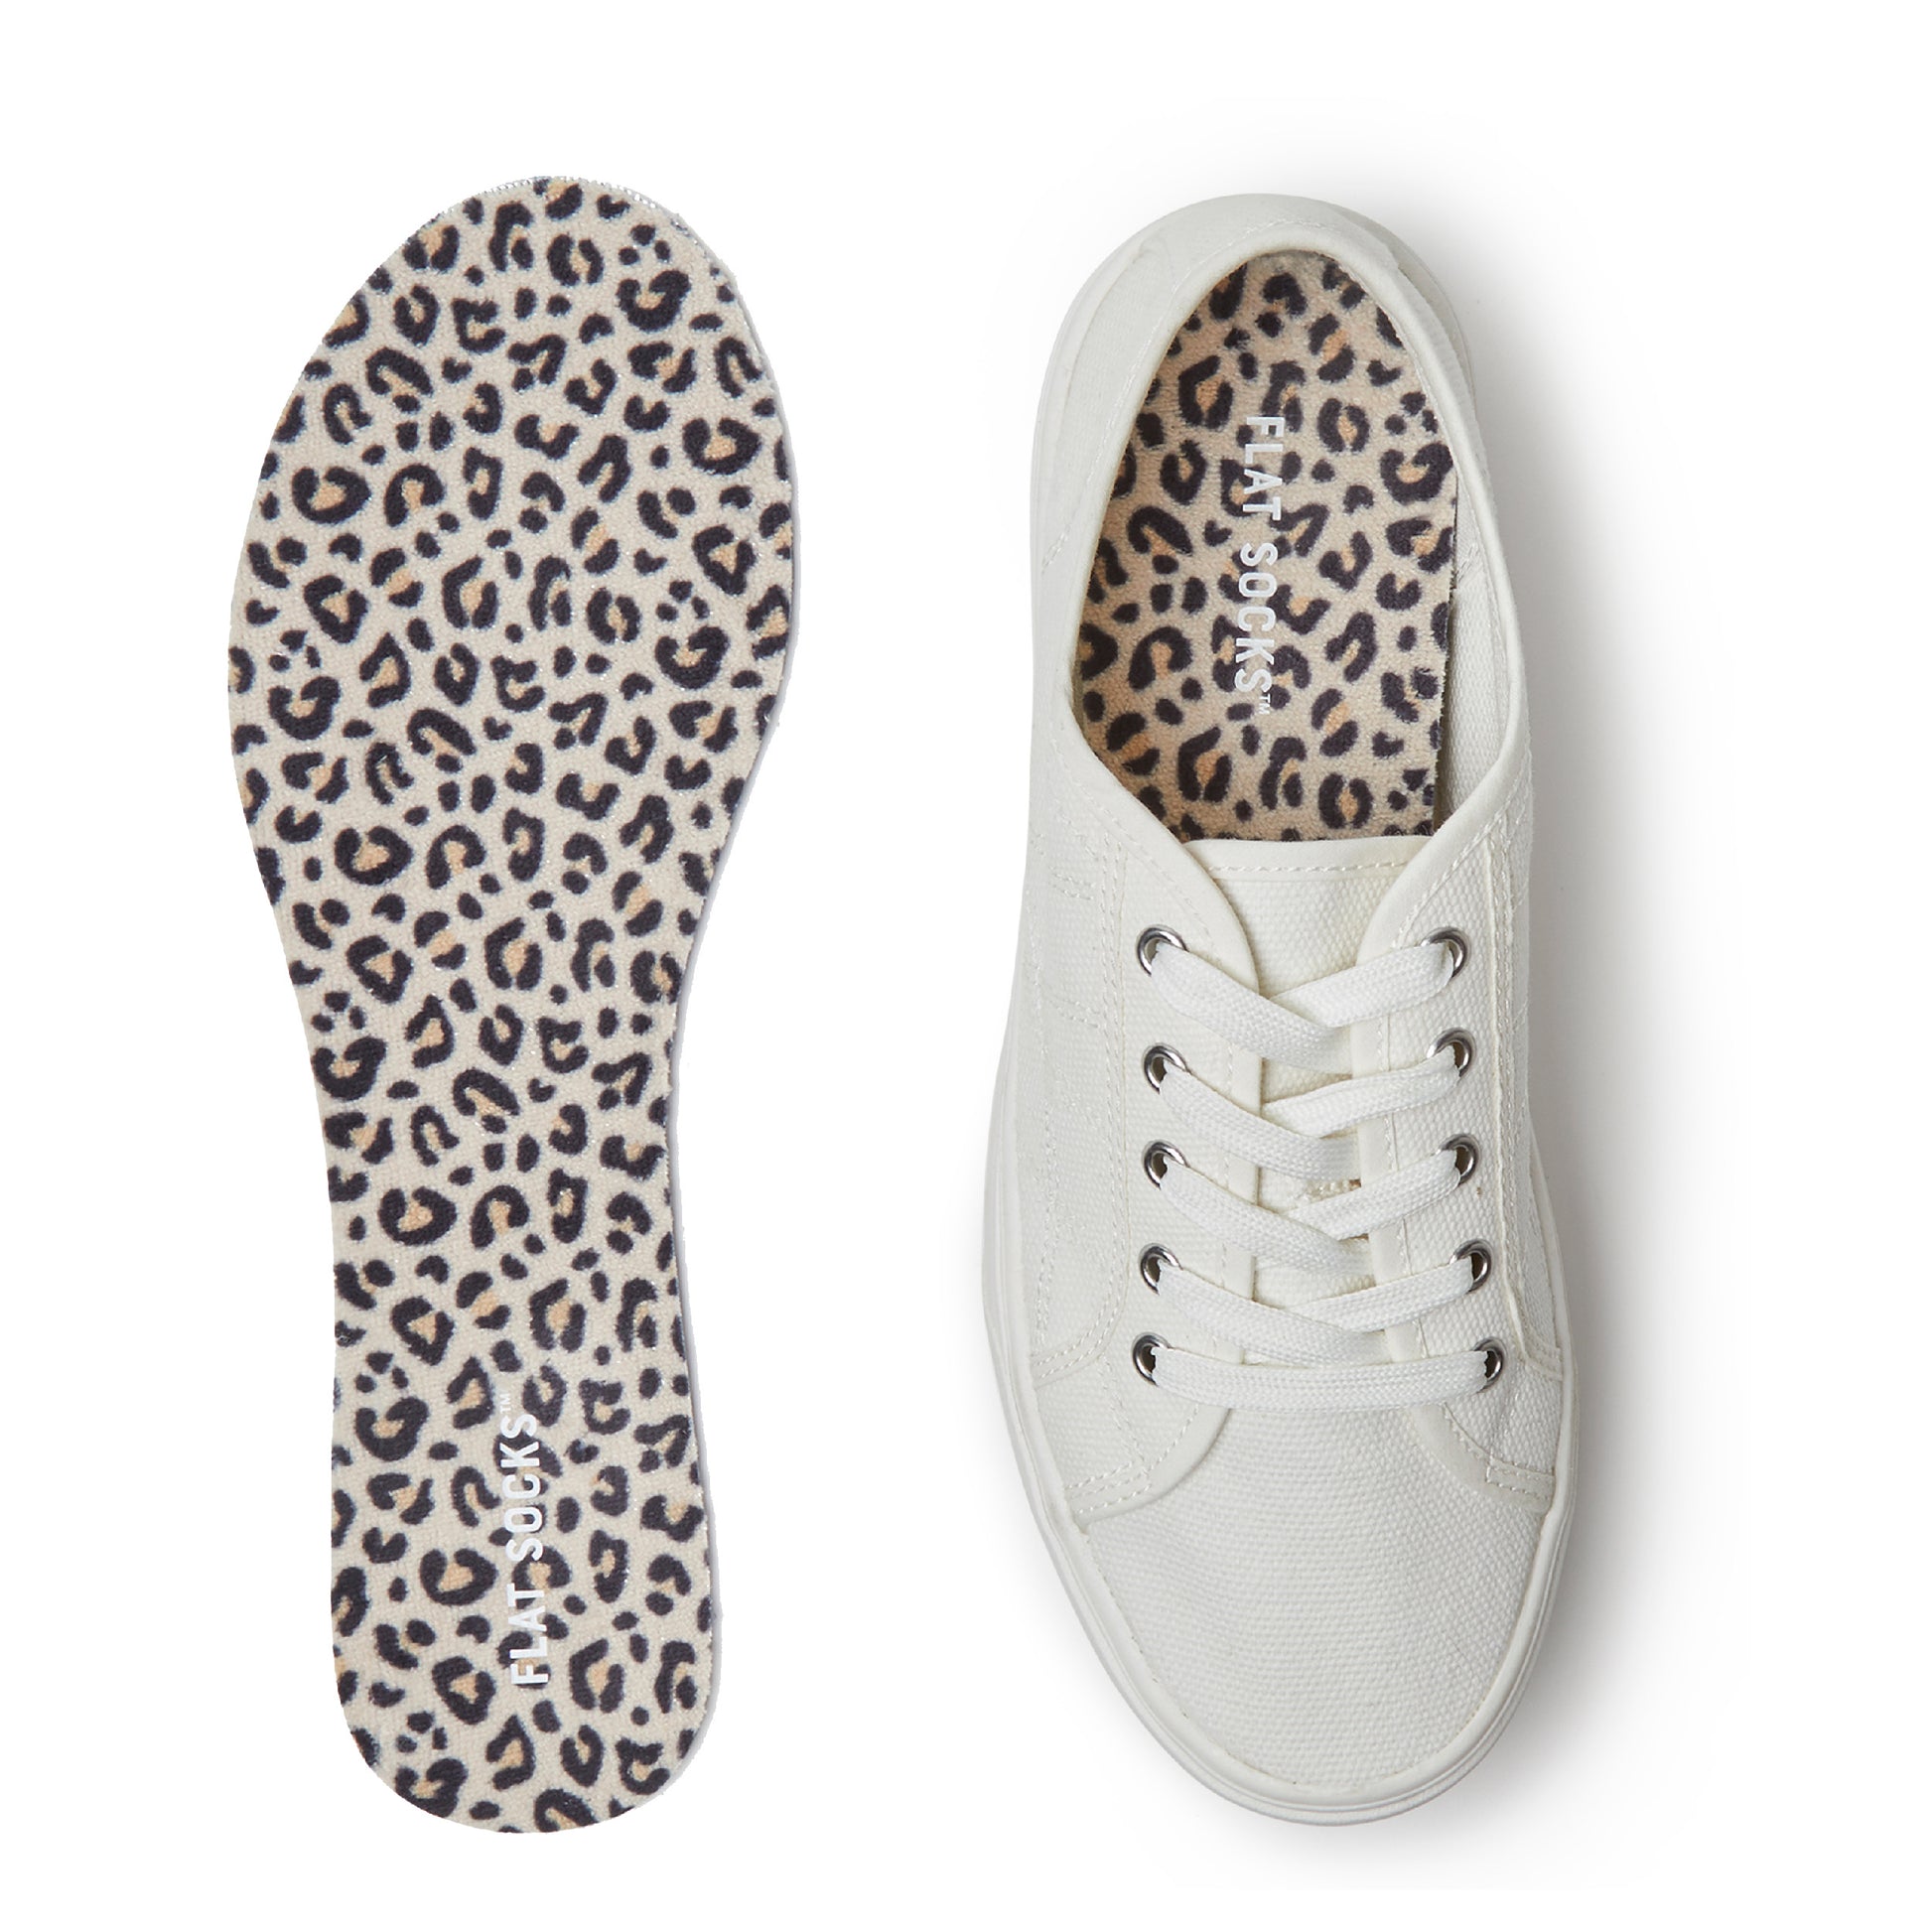 Flat Socks - Women's No Show Shoe Liners leopard cheetah print